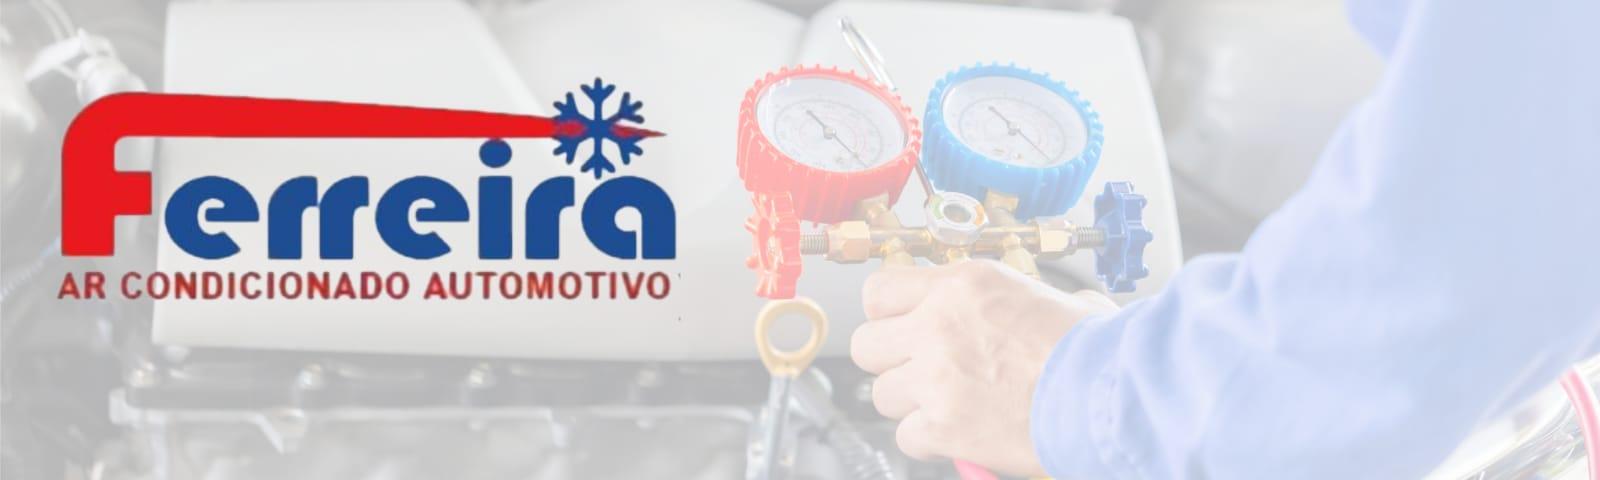 banner da empresa Ferreira Ar Condicionado Automotivo